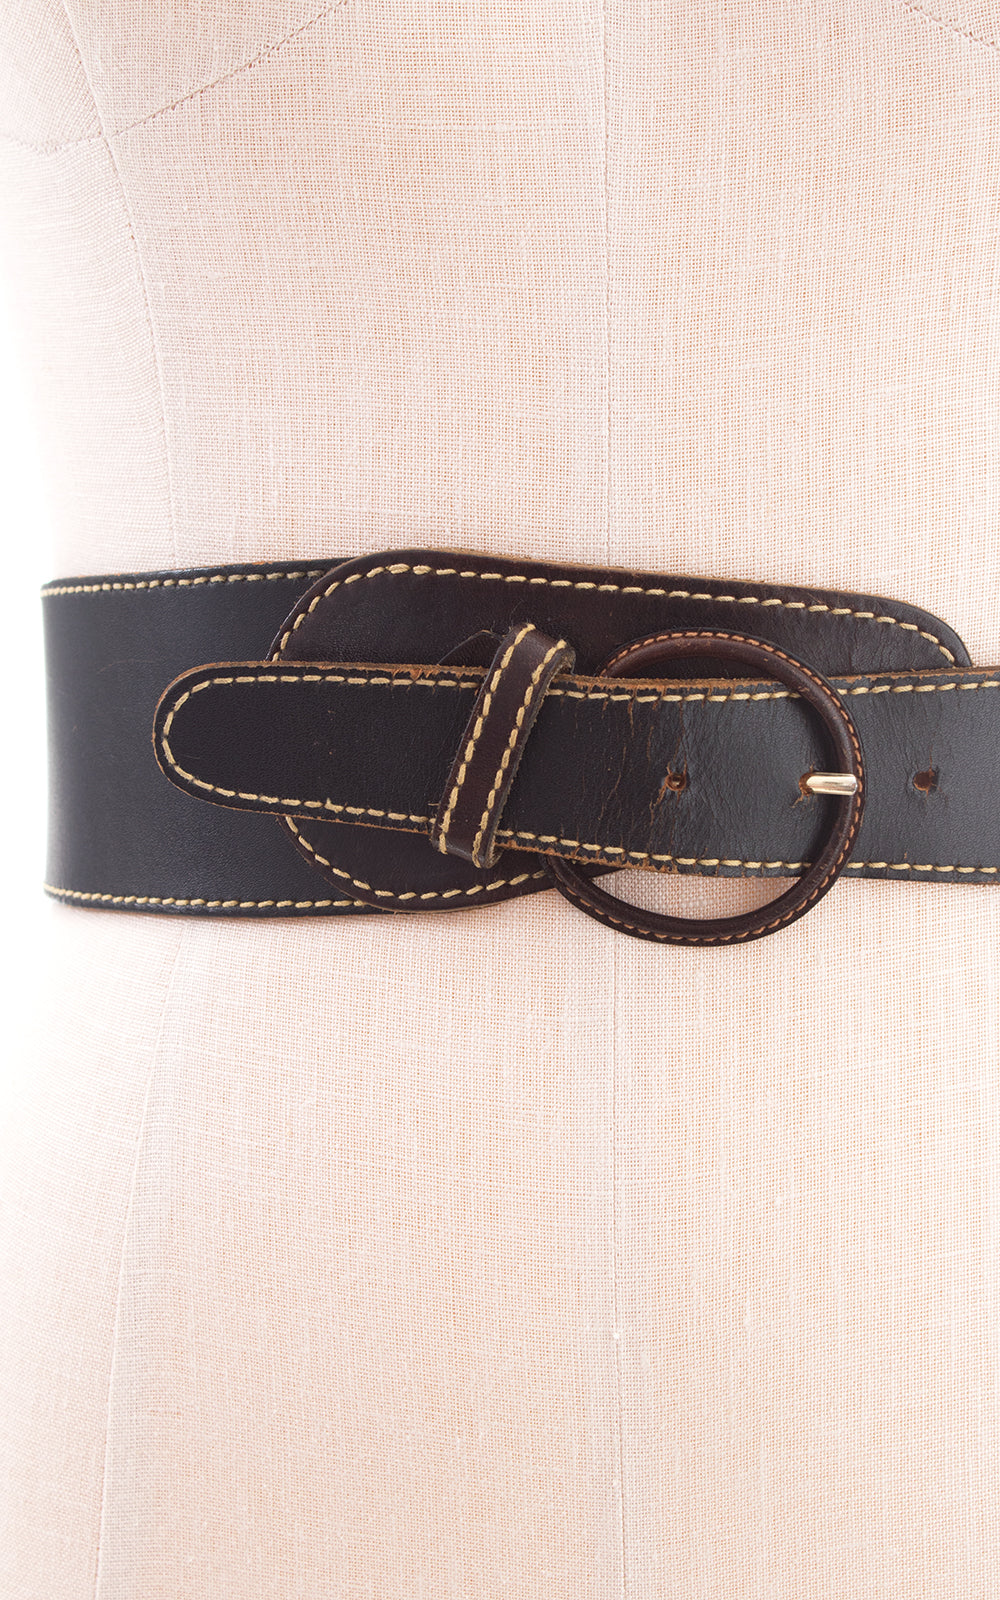 1990s Black Leather Cinch Belt